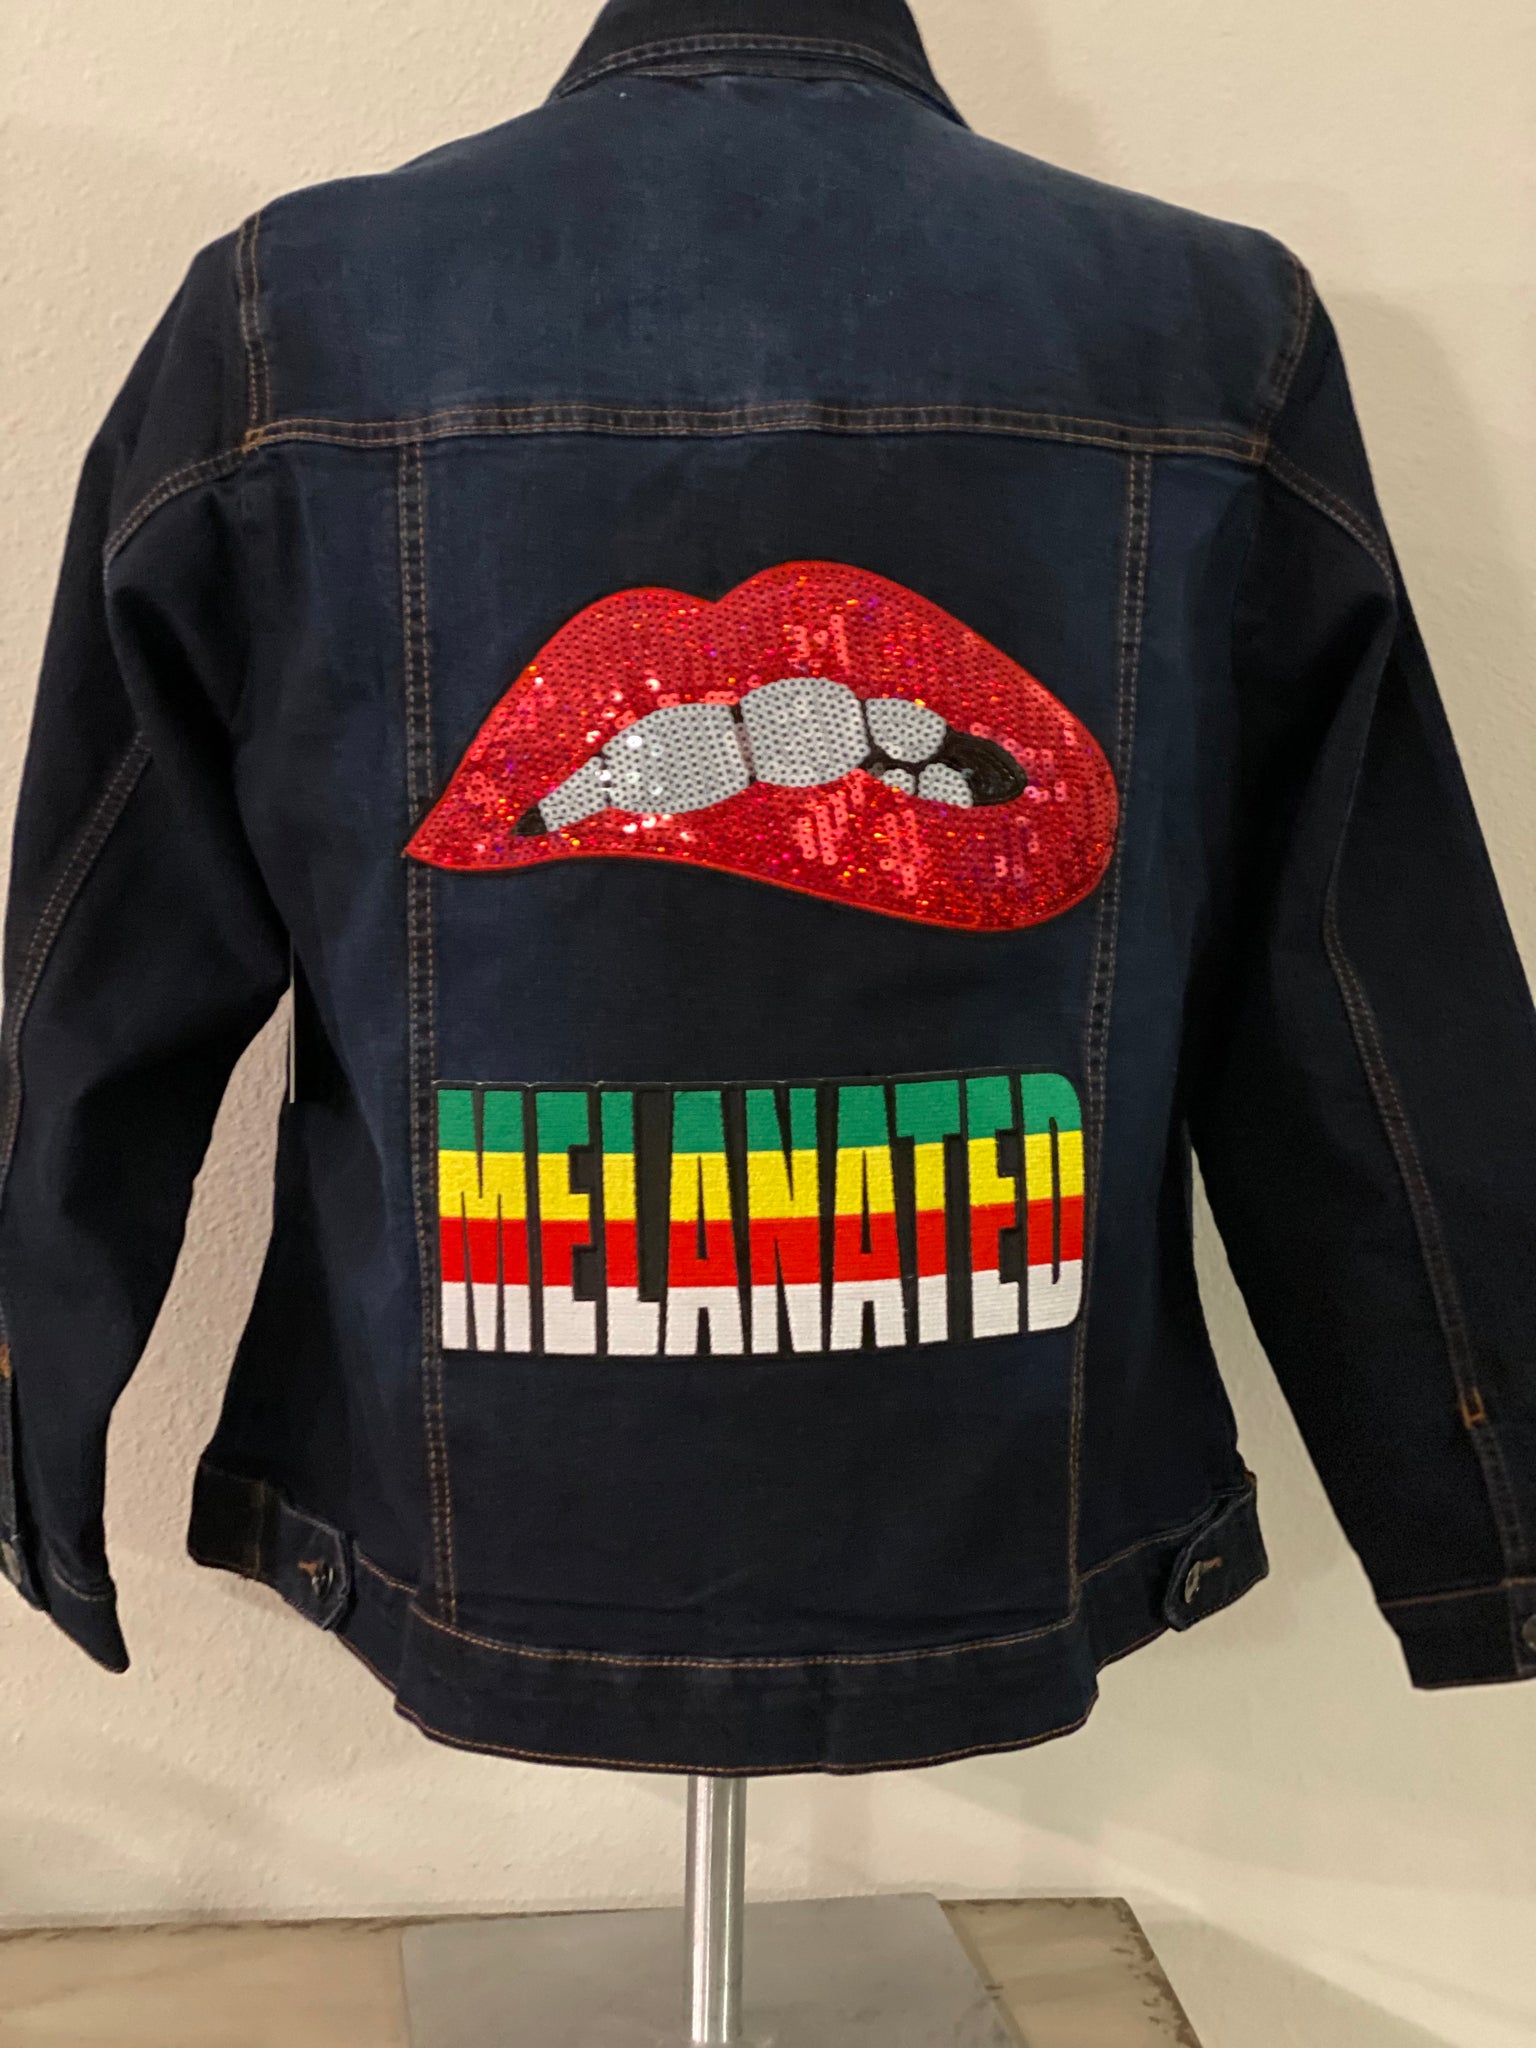 (New) Melanated Queen - Custom  “Reworked”  Denim Jacket Plus Size 2X